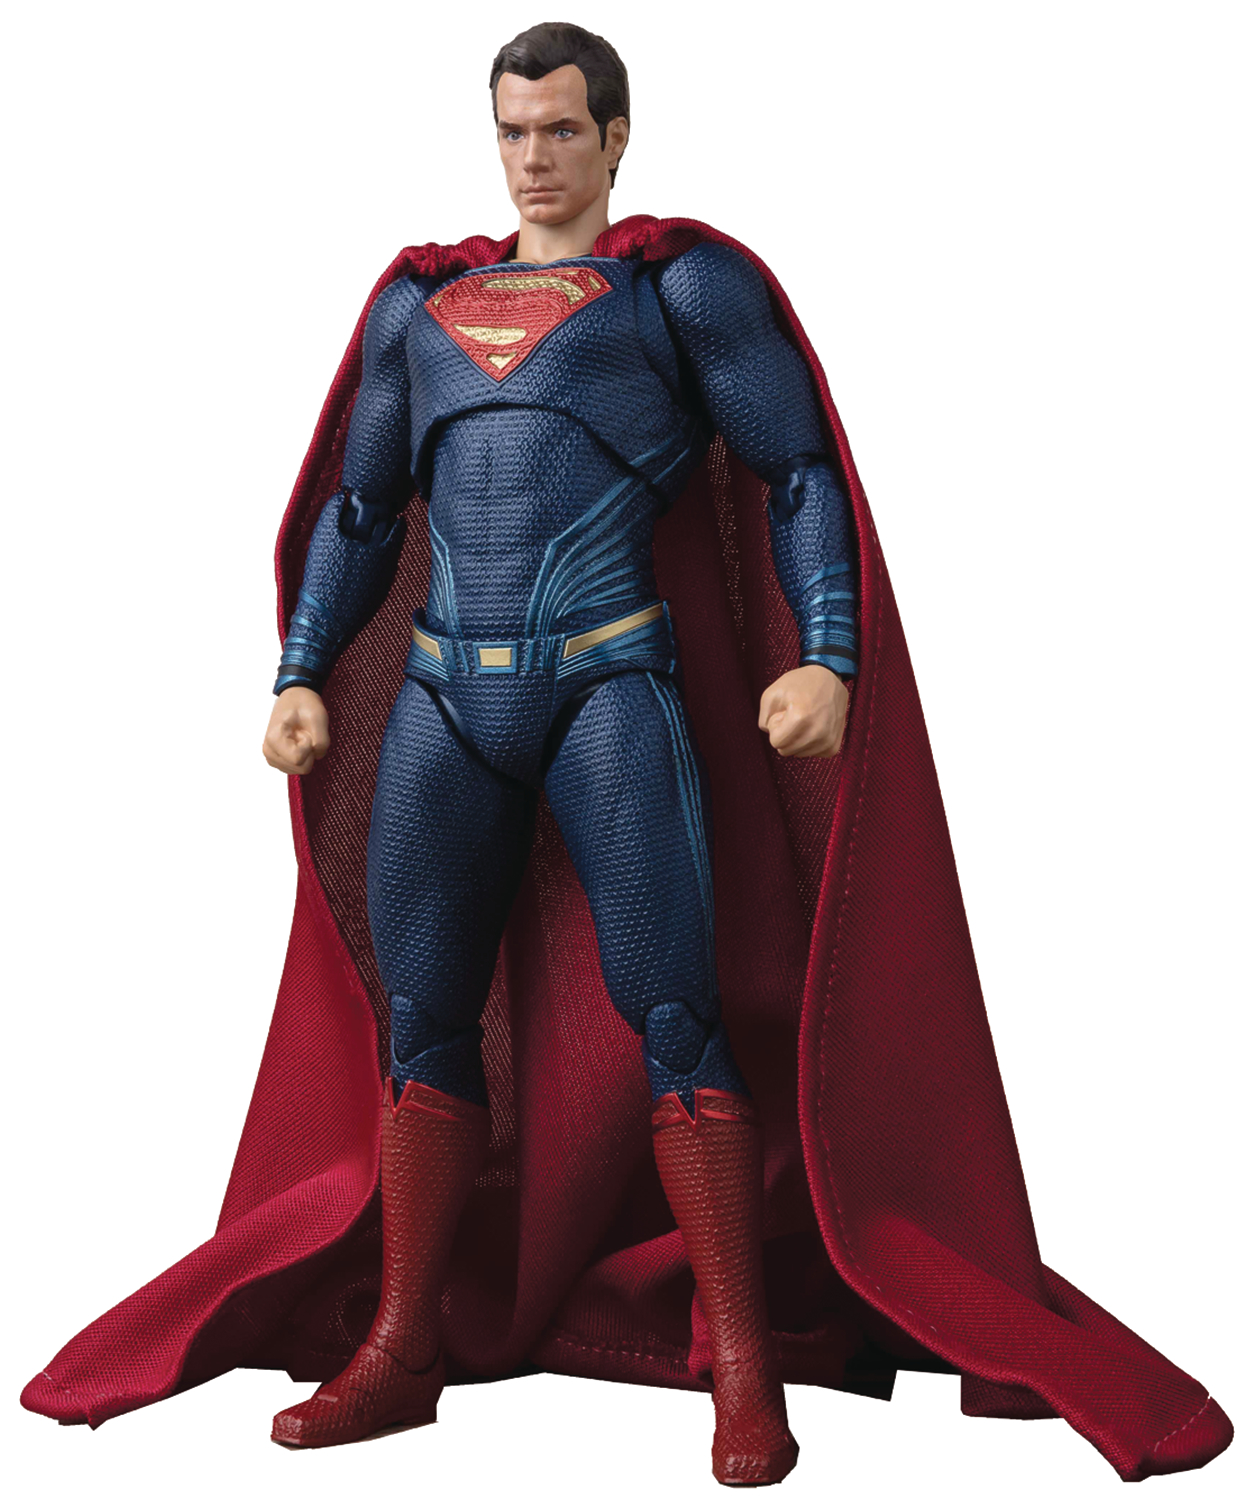 Justice League: Superman Figuarts Action Figure